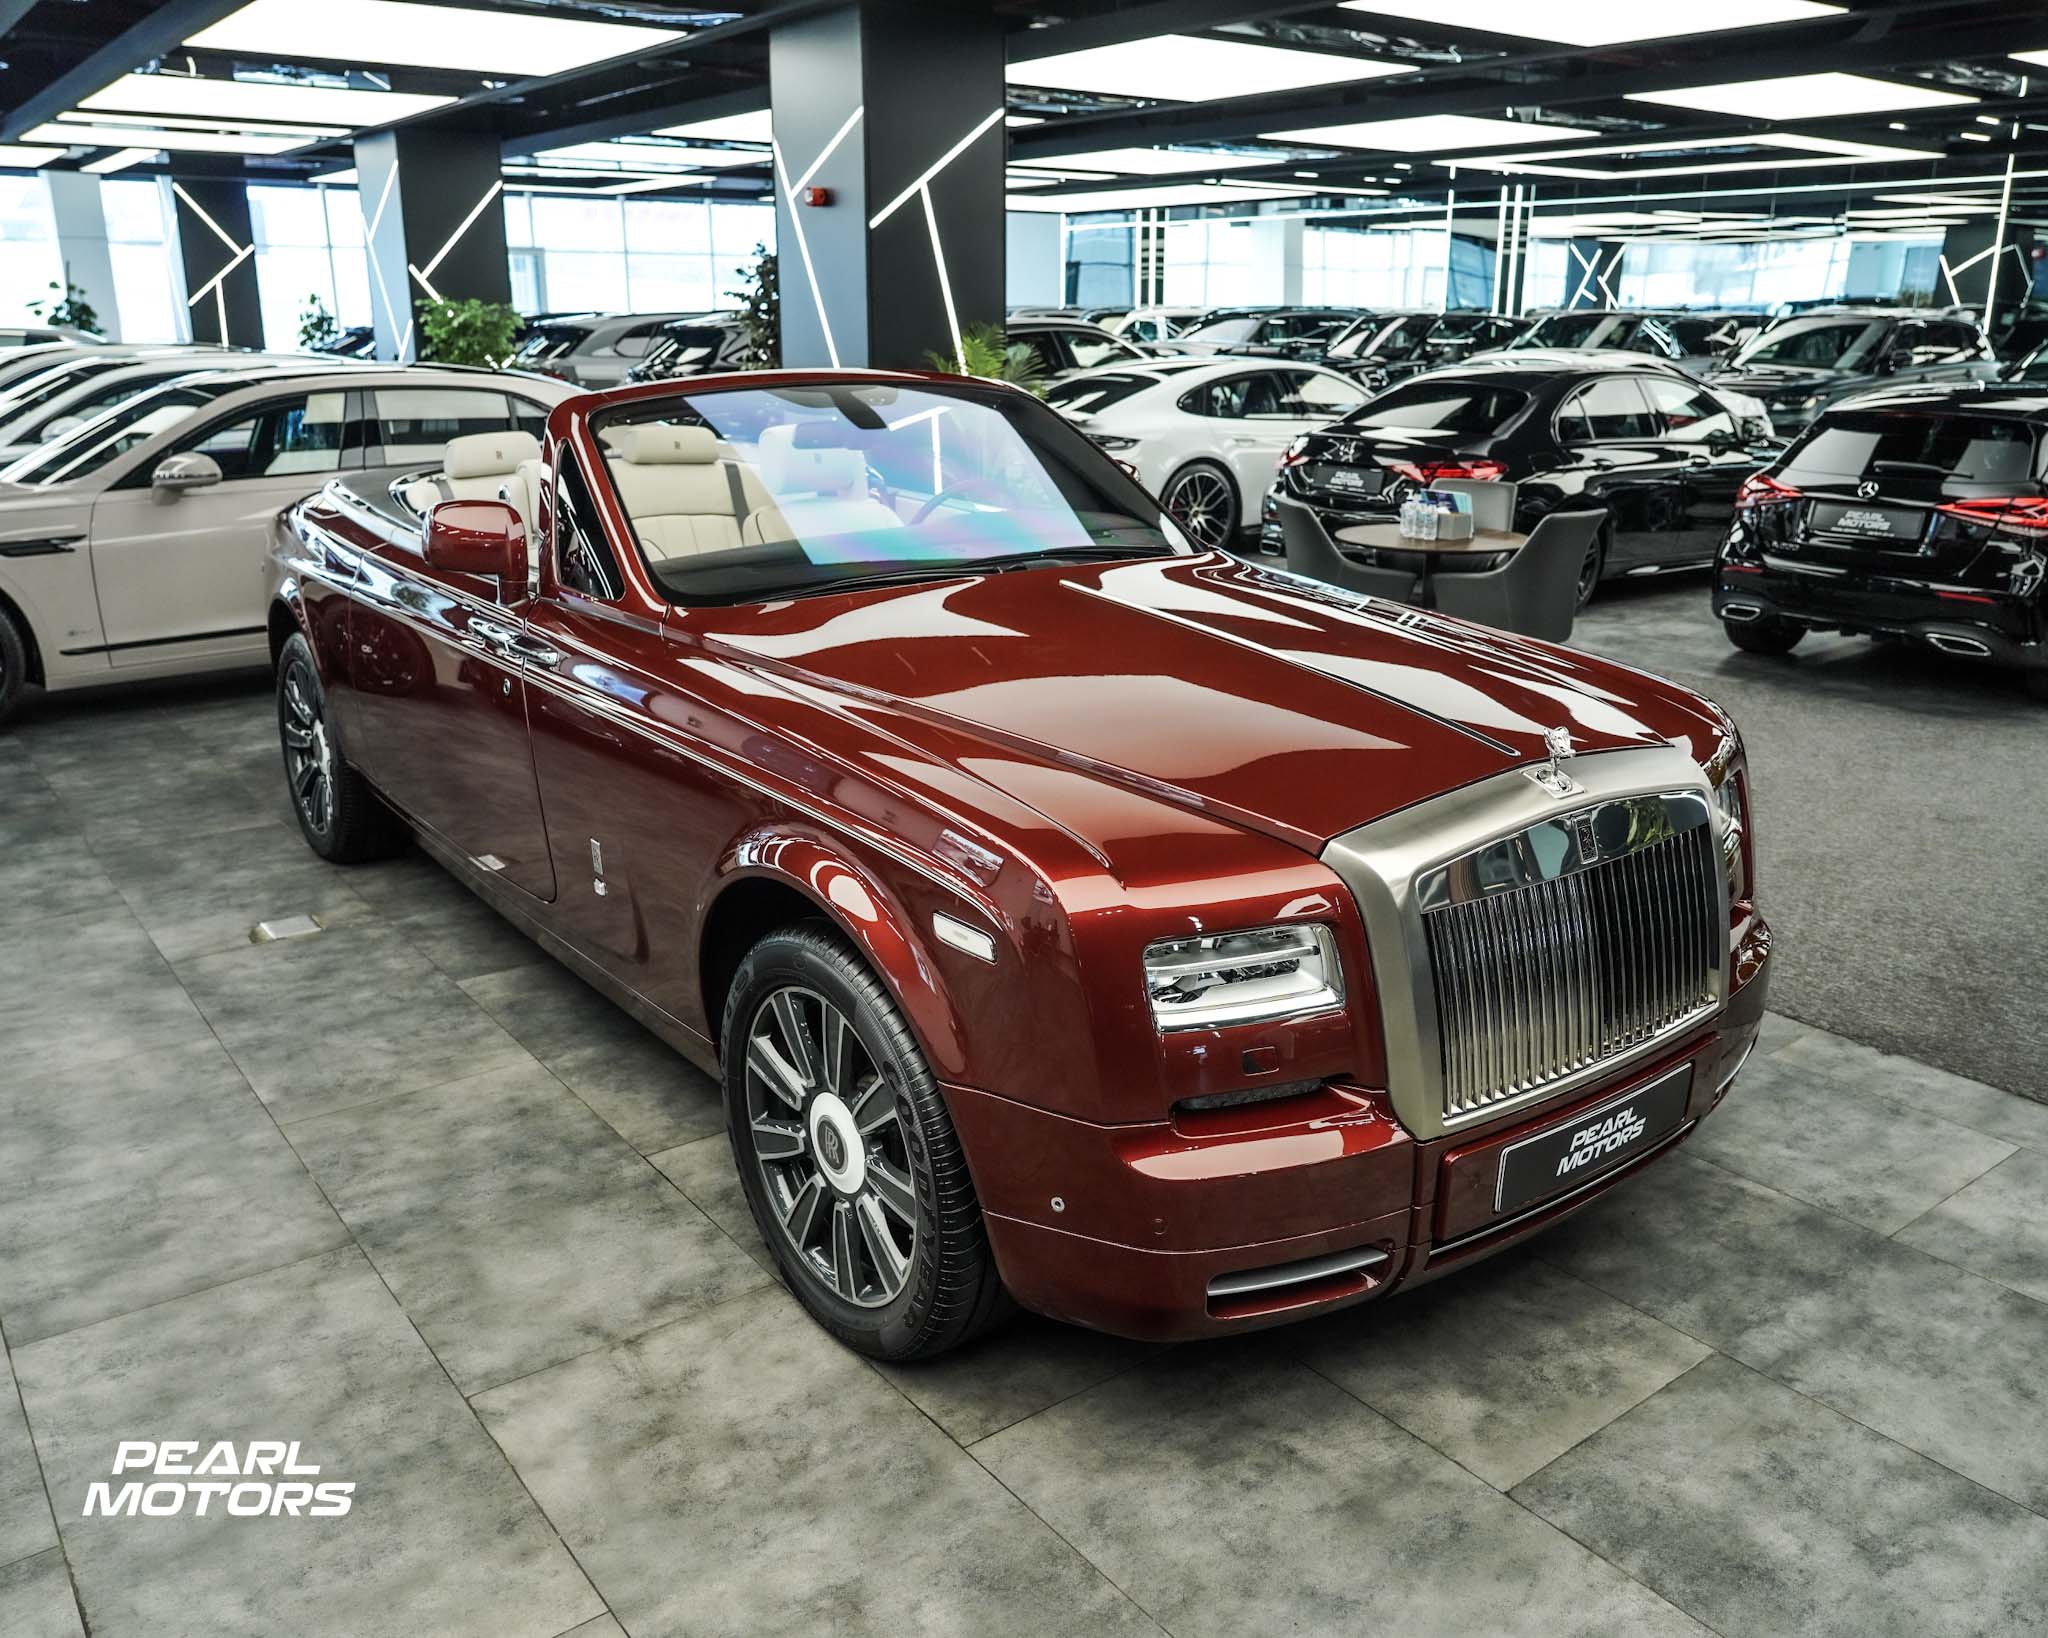 Rolls Royce Phantom Drophead coupe